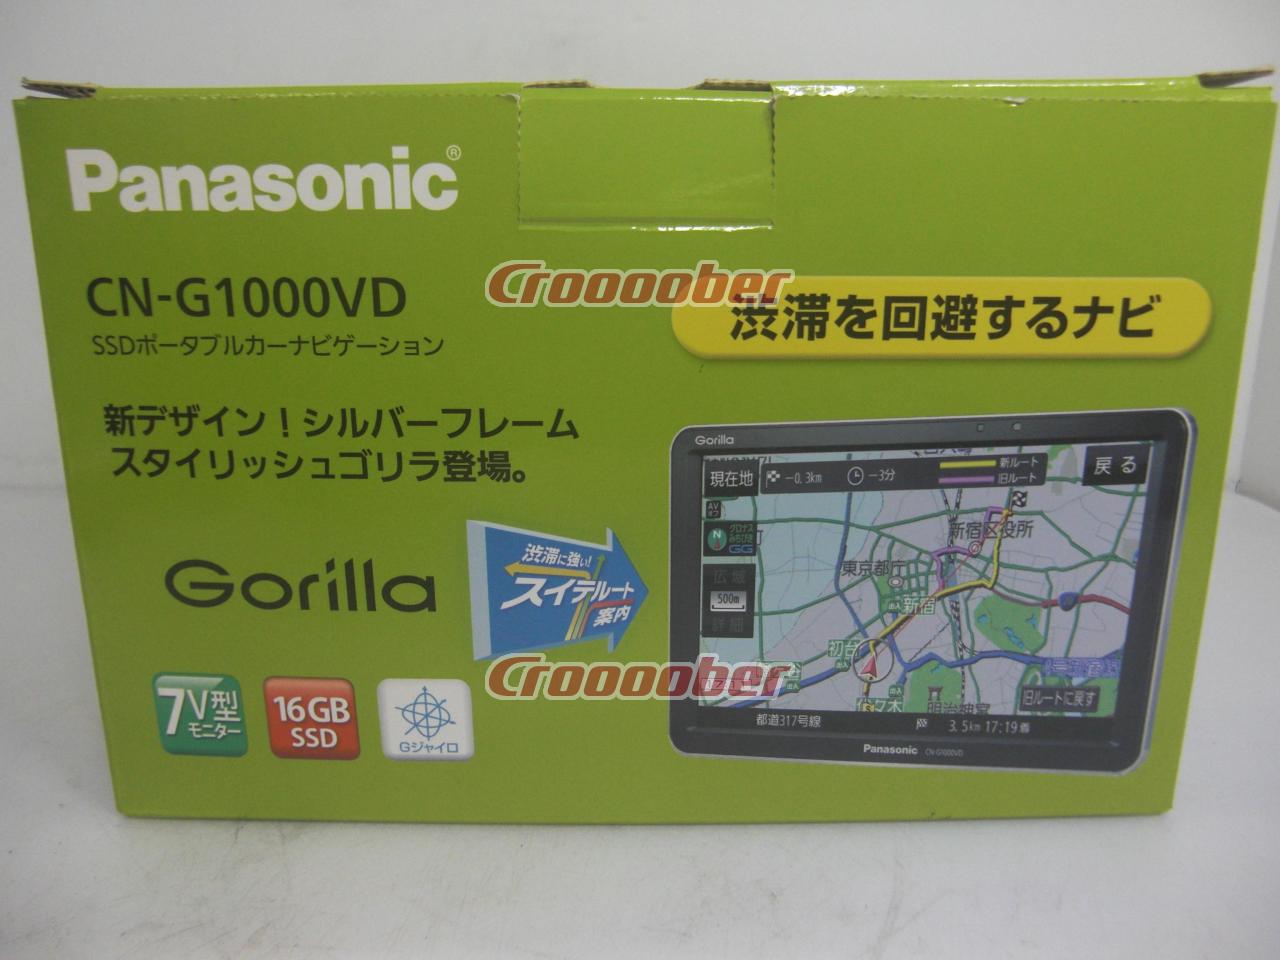 Panasonic CN-G1000VD | Portable Memory Navigation(digital) | Croooober